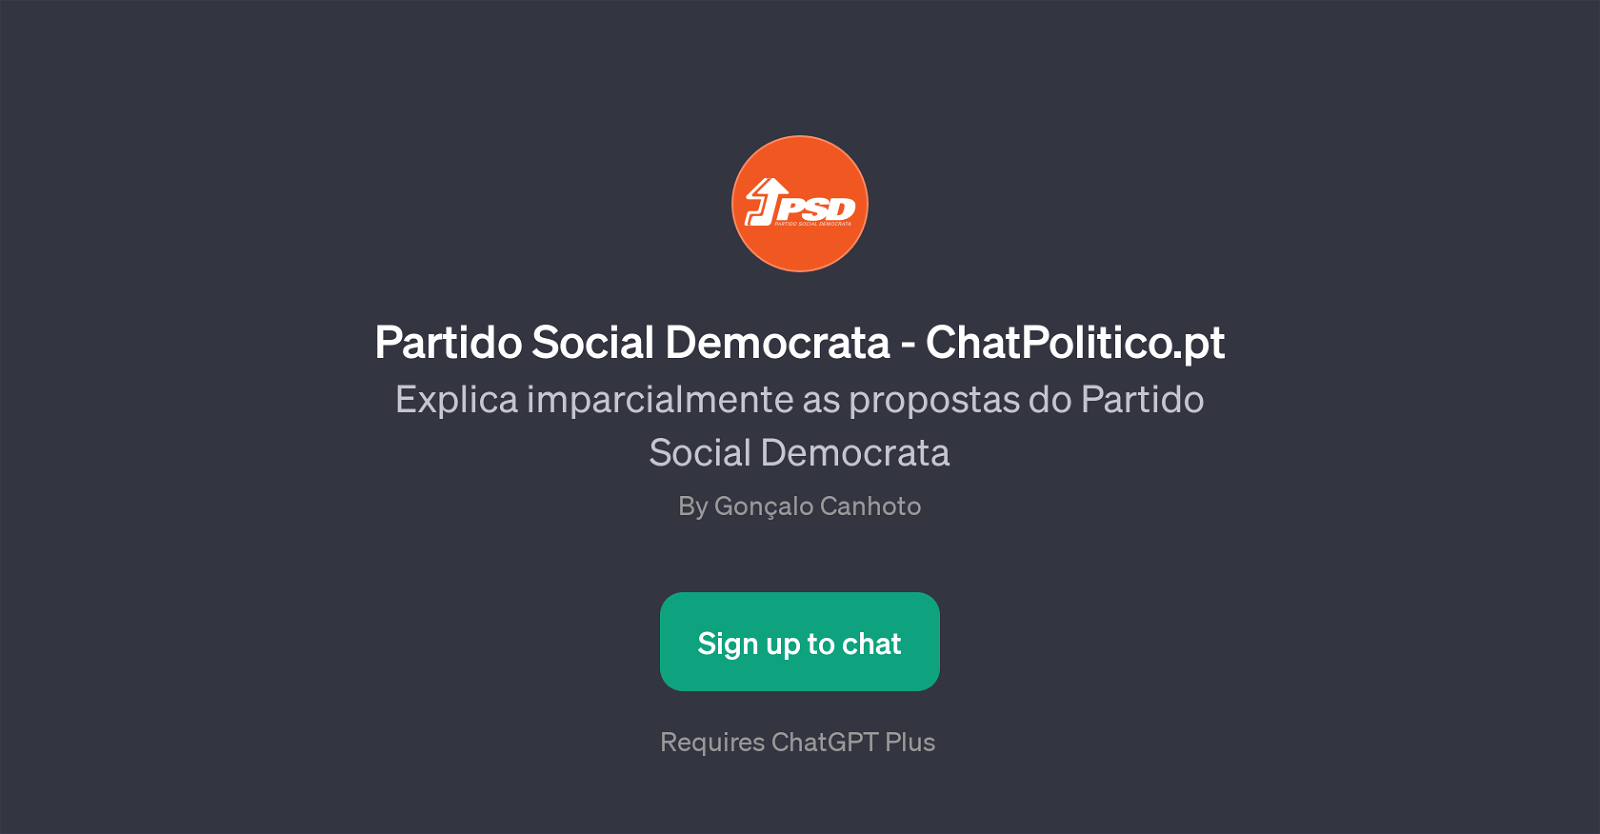 Partido Social Democrata - ChatPolitico.pt website